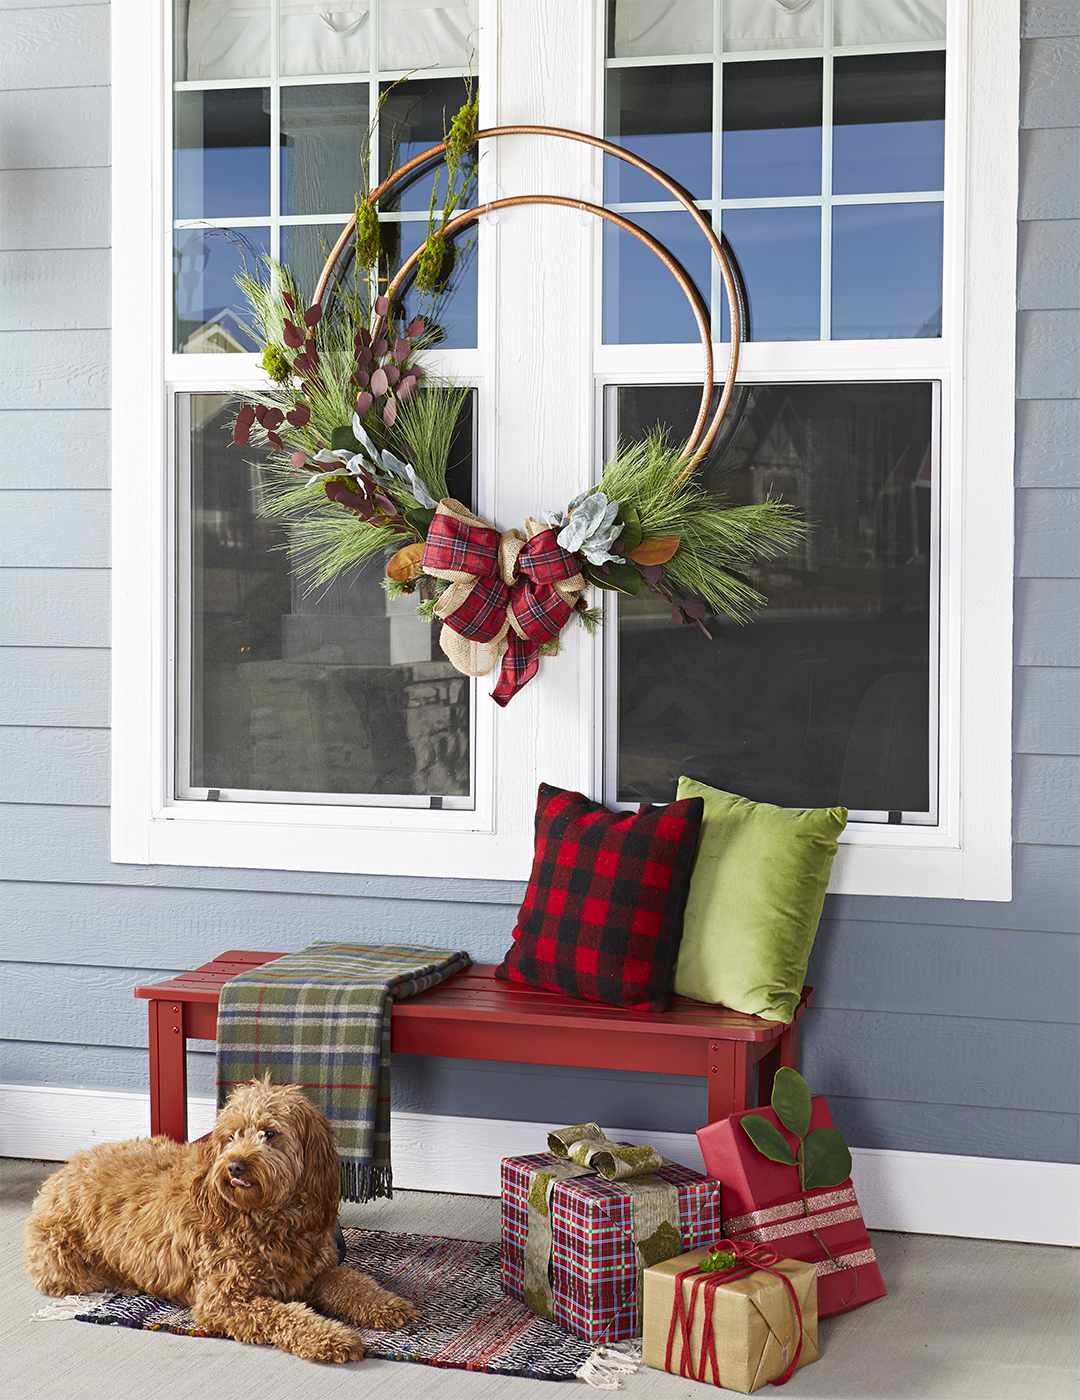 oversize Christmas wreath made of hula hoops hanging between windows outside